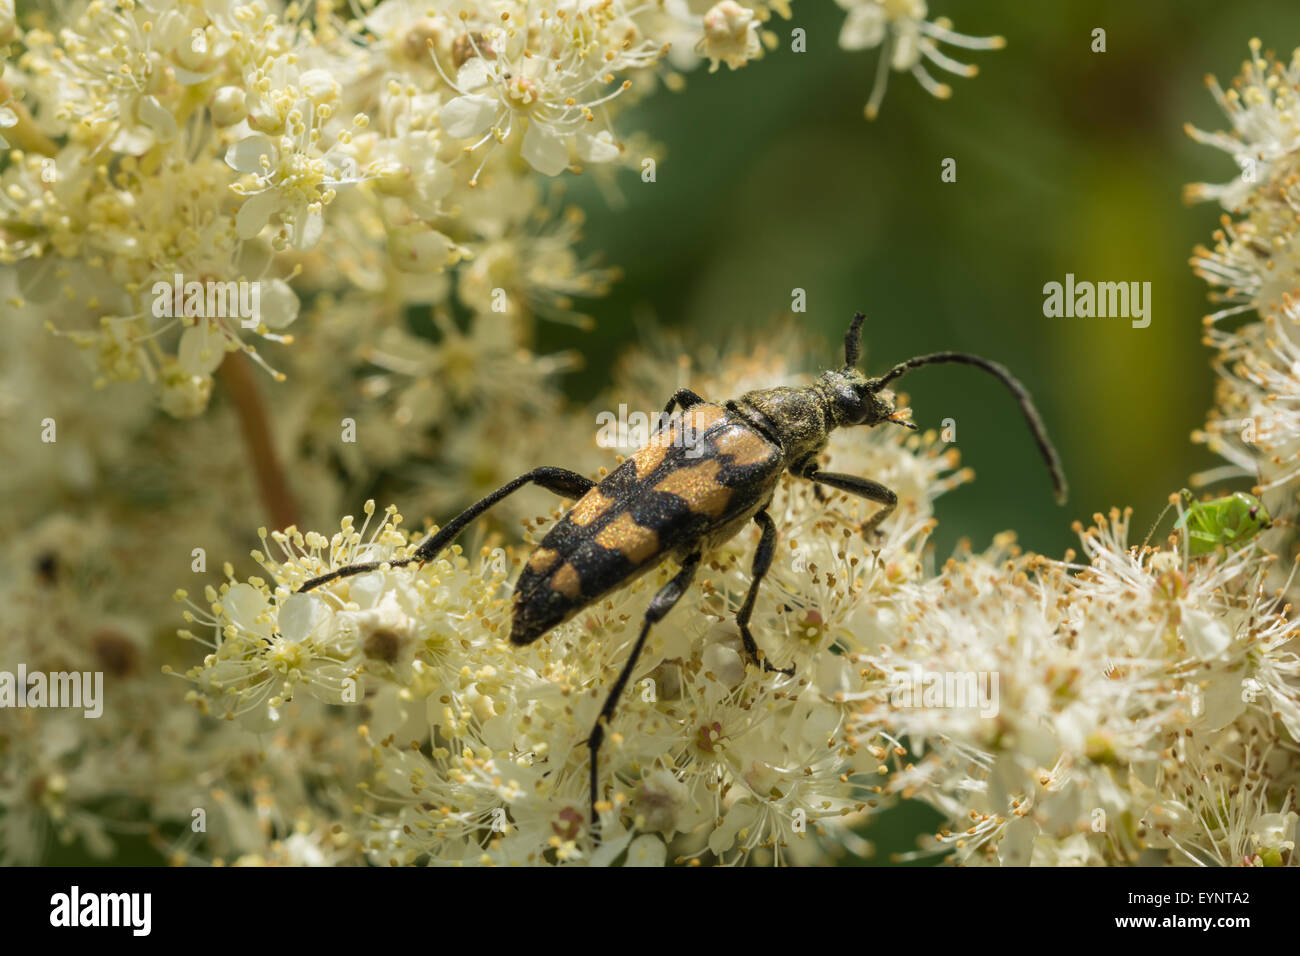 A Strangalia maculata long-horned beetle. Stock Photo